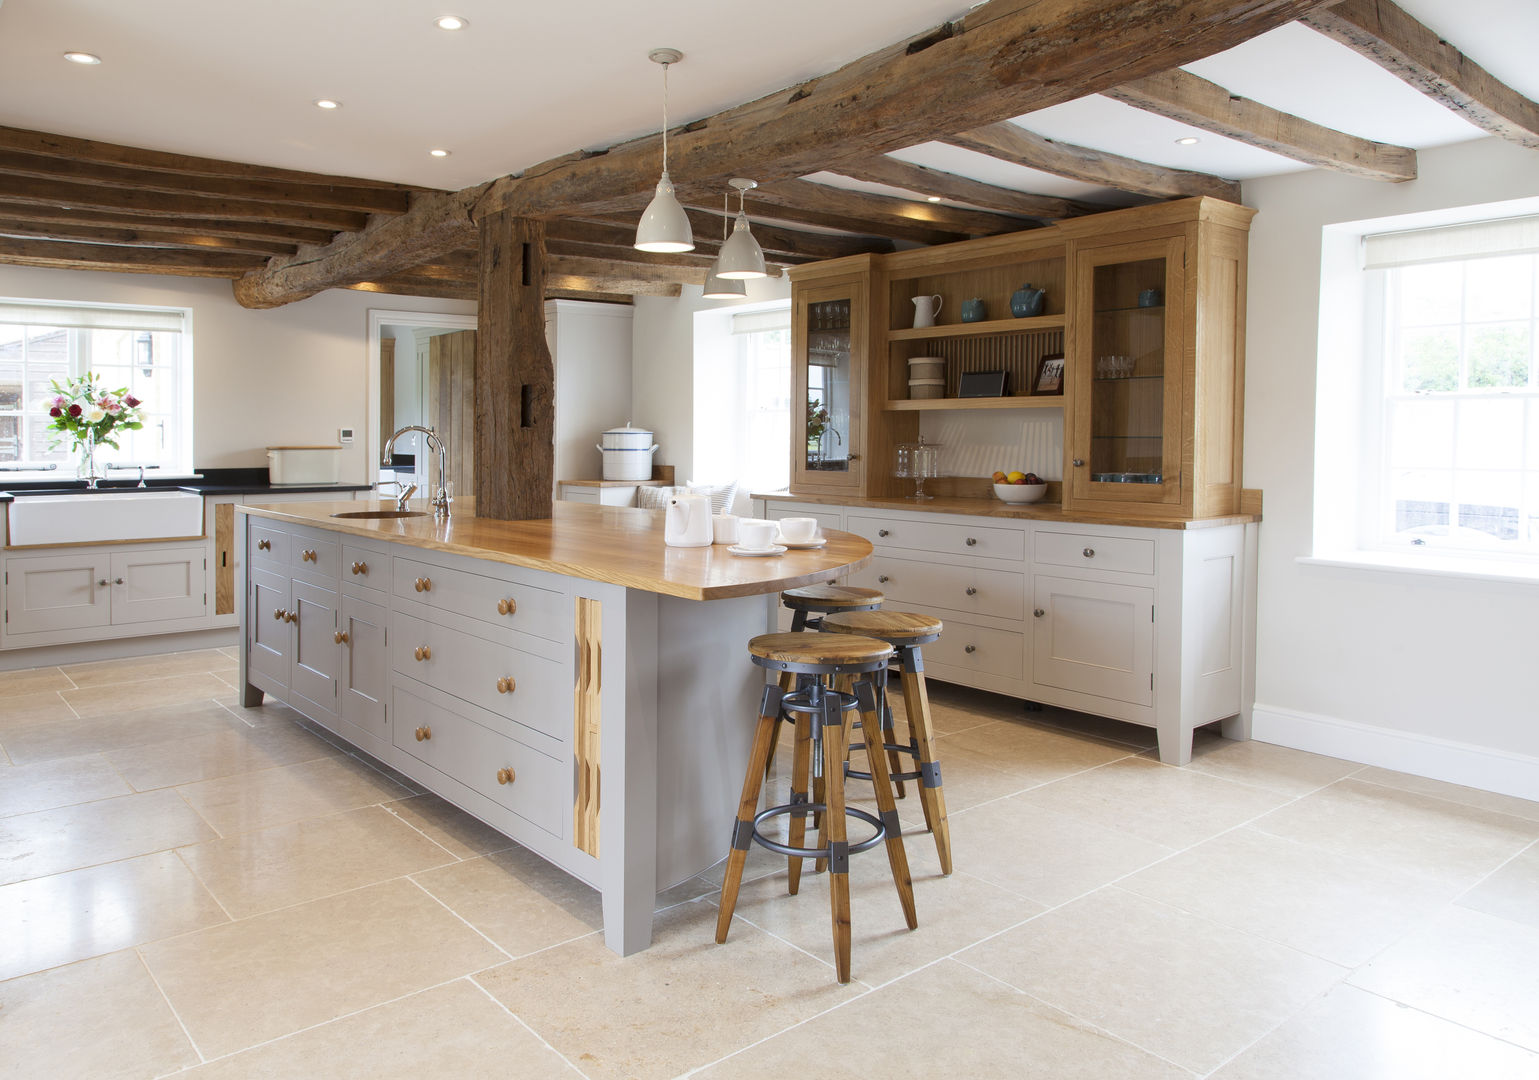 Old English - Bespoke kitchen project in Cambridgeshire Baker & Baker Rustic style kitchen dresser,kitchen island,seating,tile flooring,beams,lighting